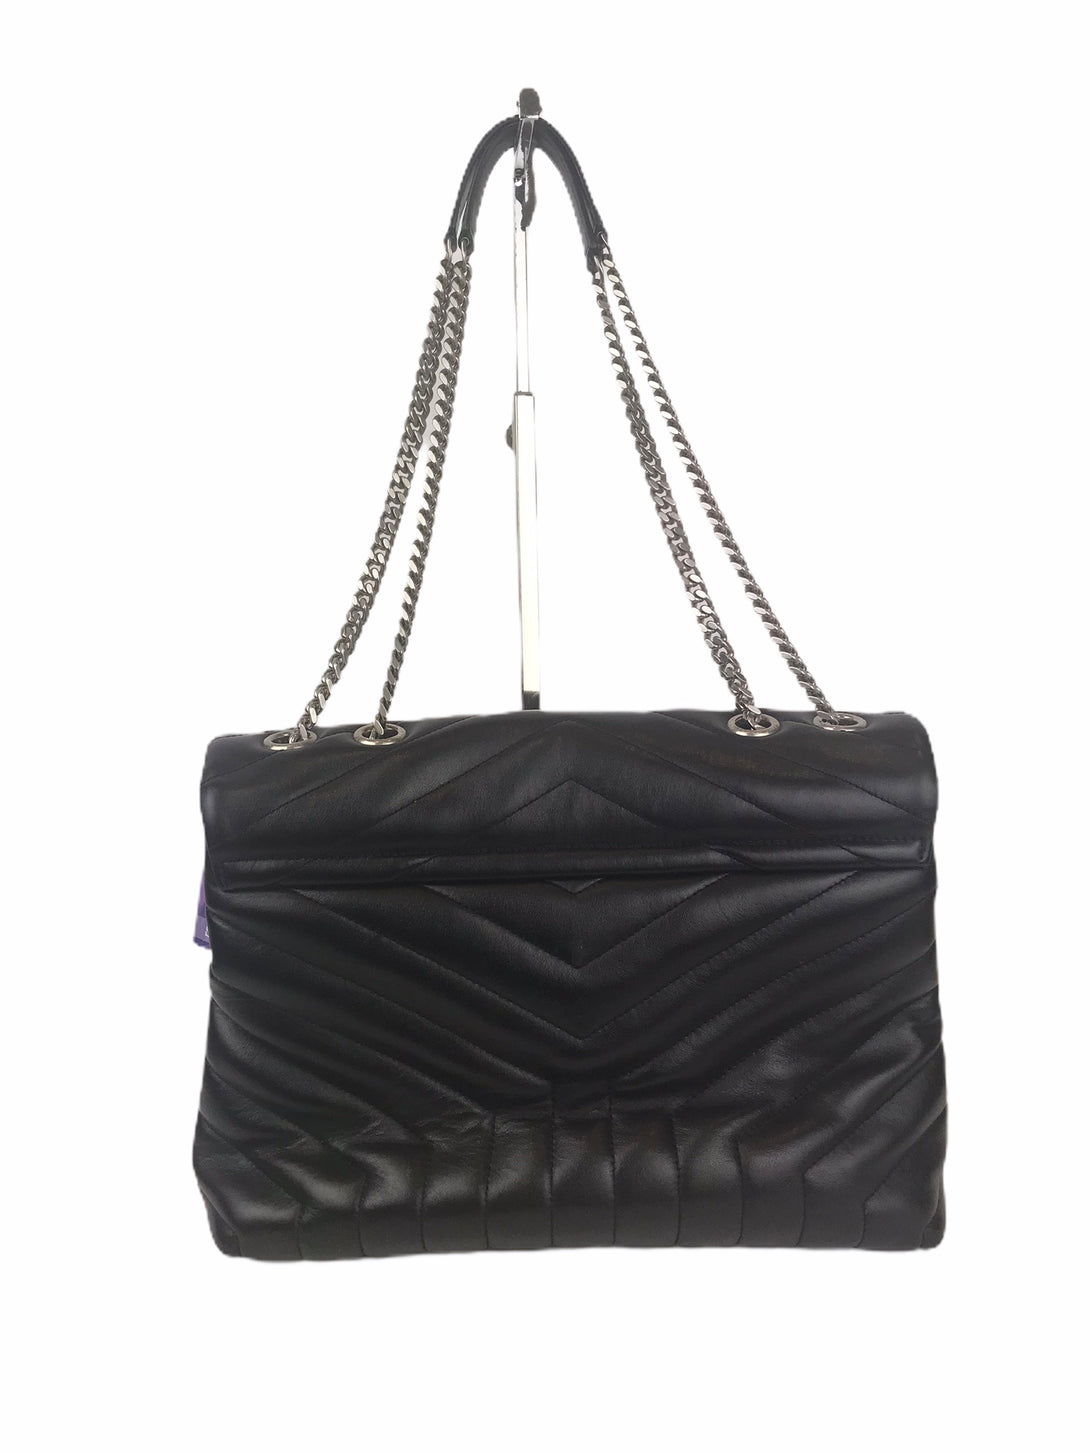 Saint Laurent Black Leather LouLou Shoulder Bag - As Seen on Instagram 23/08/2020 - Siopaella Designer Exchange